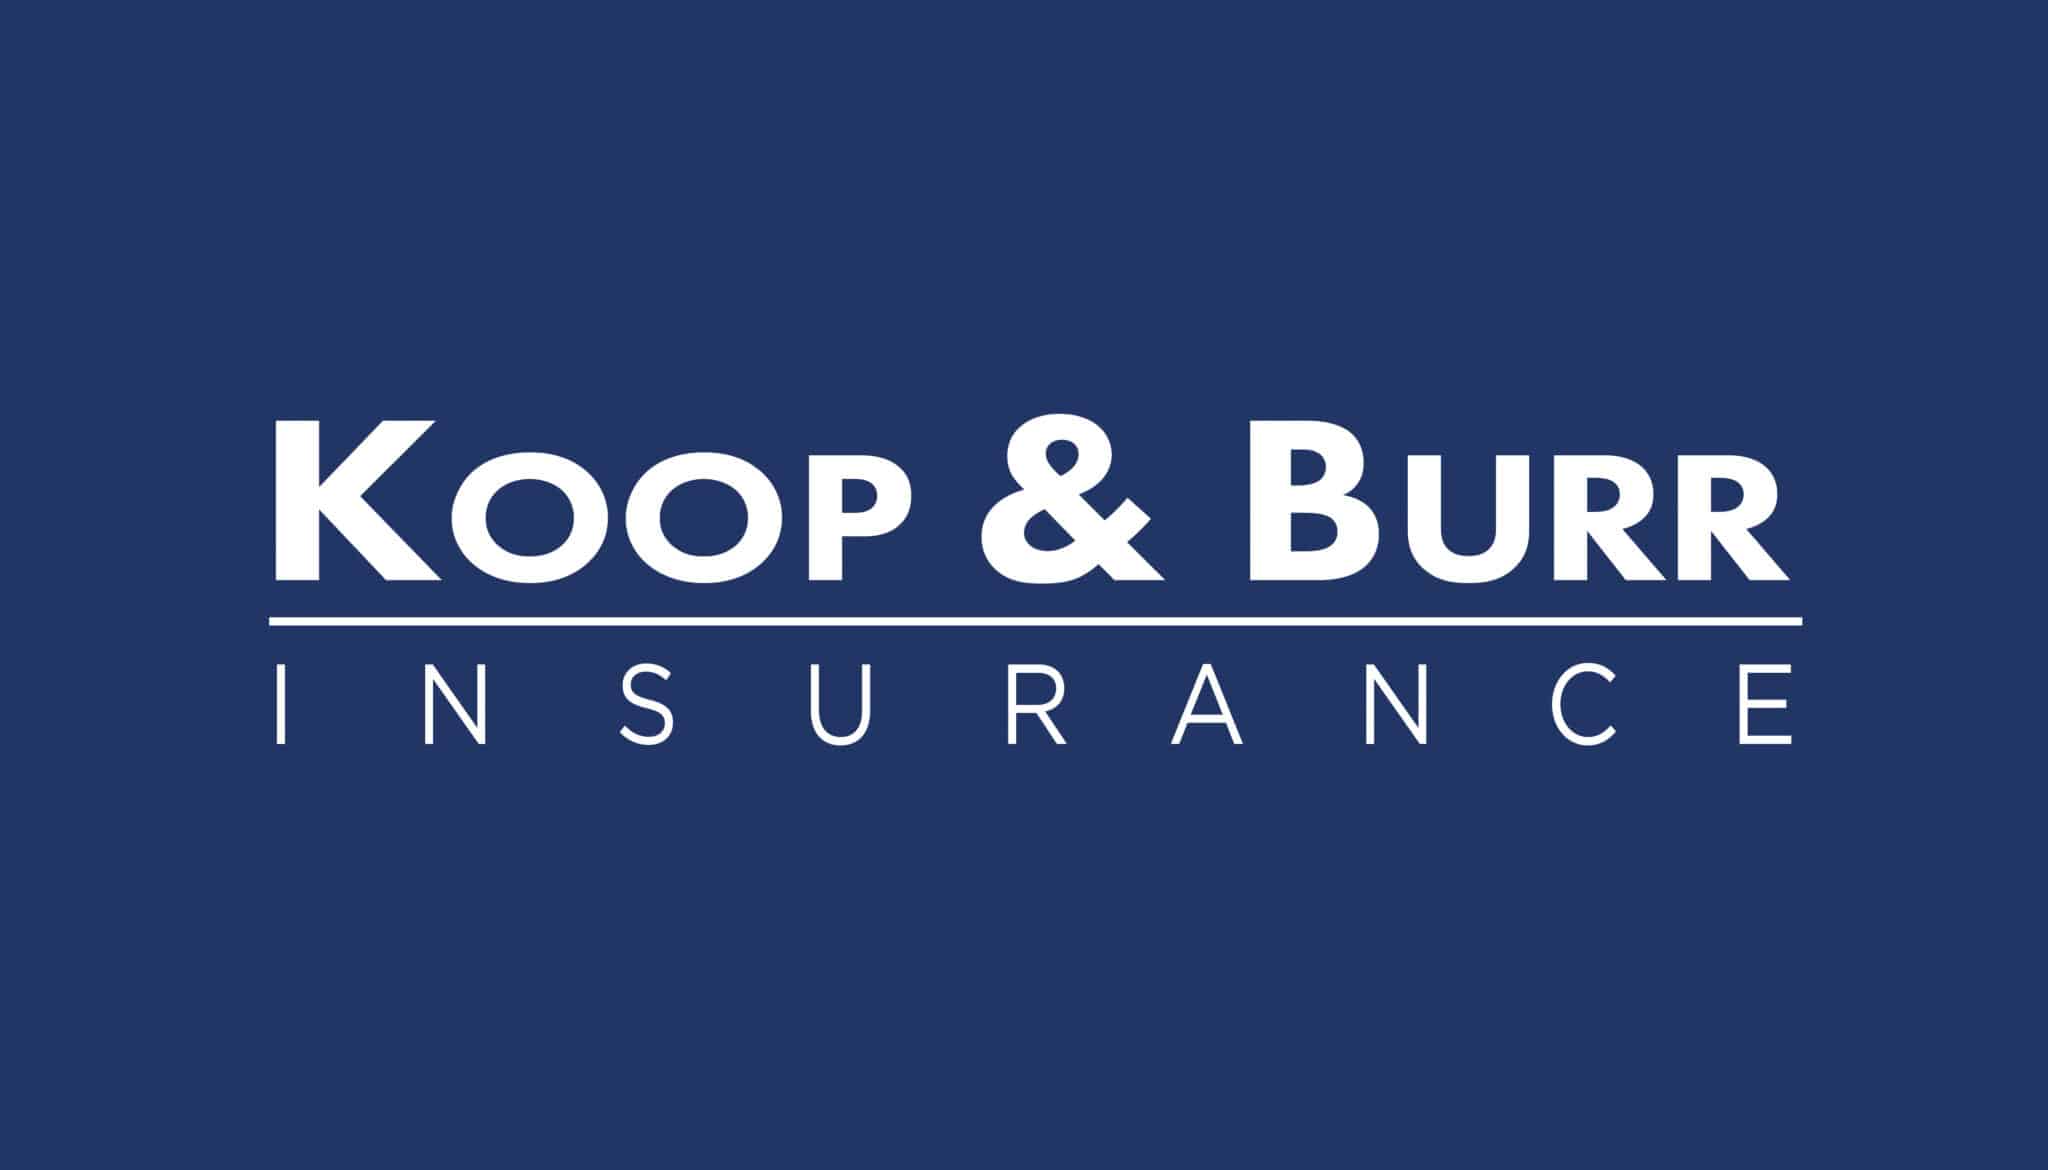 Koop & Burr Insurance